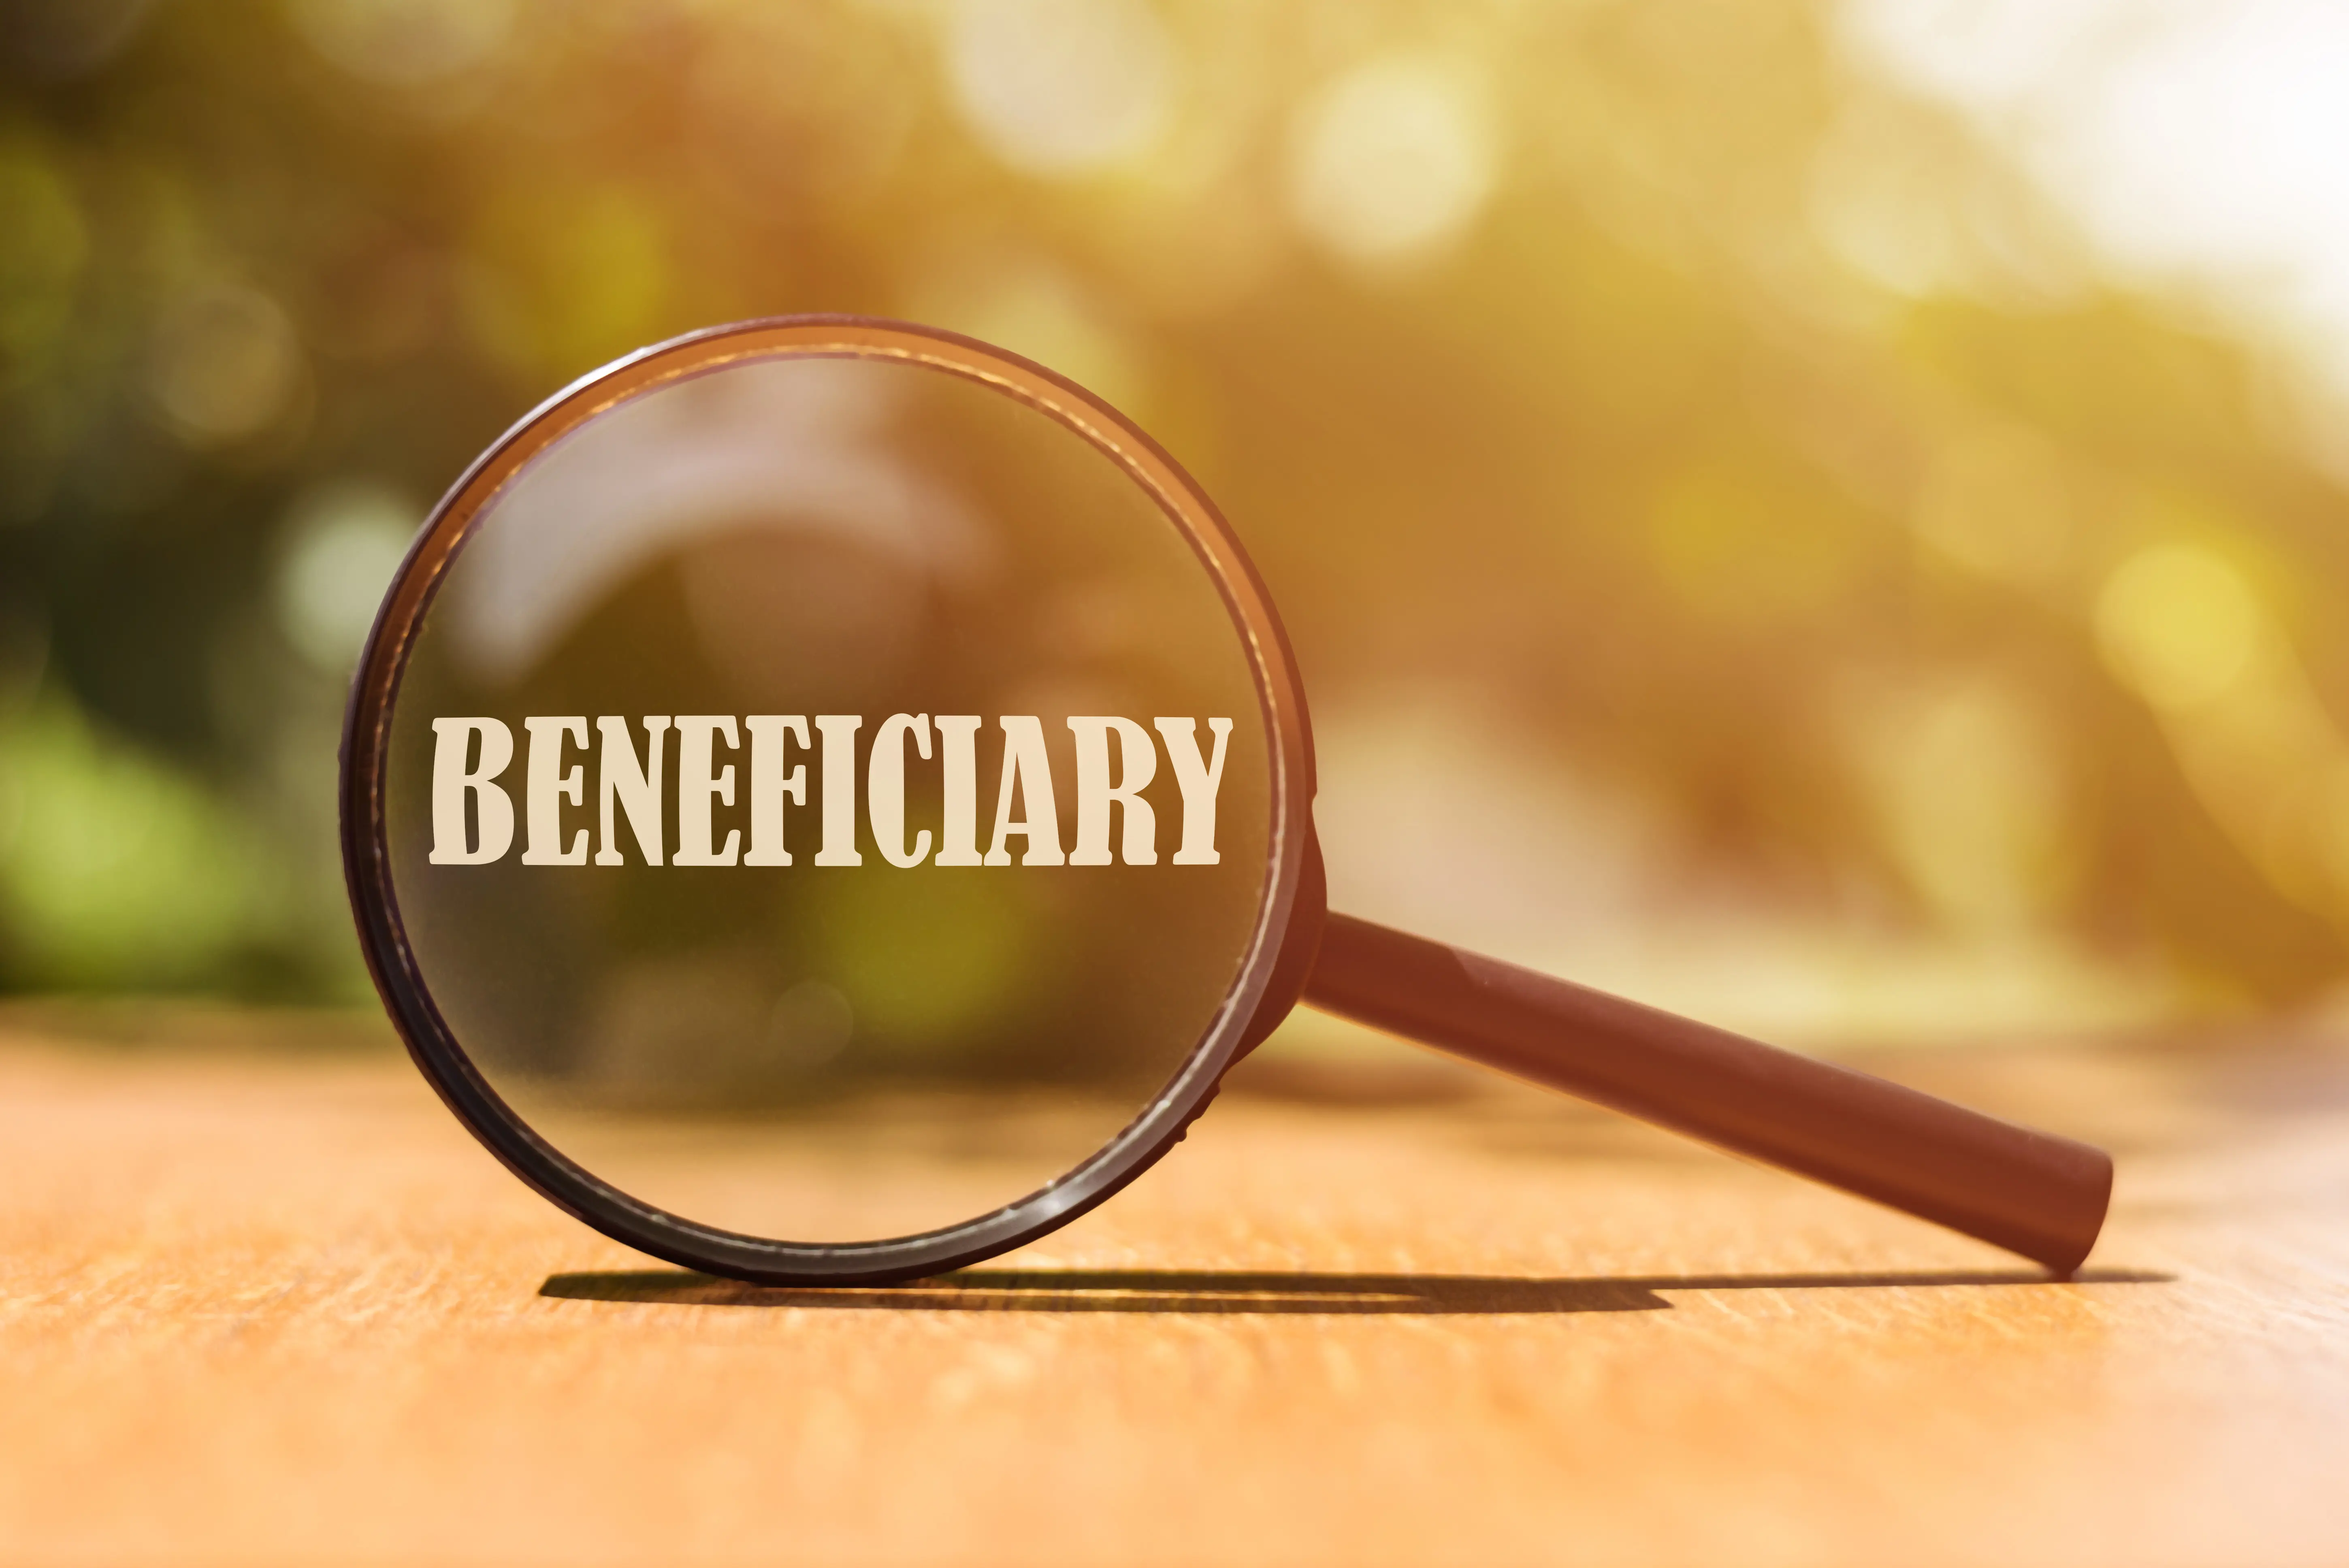 Beneficiary designations